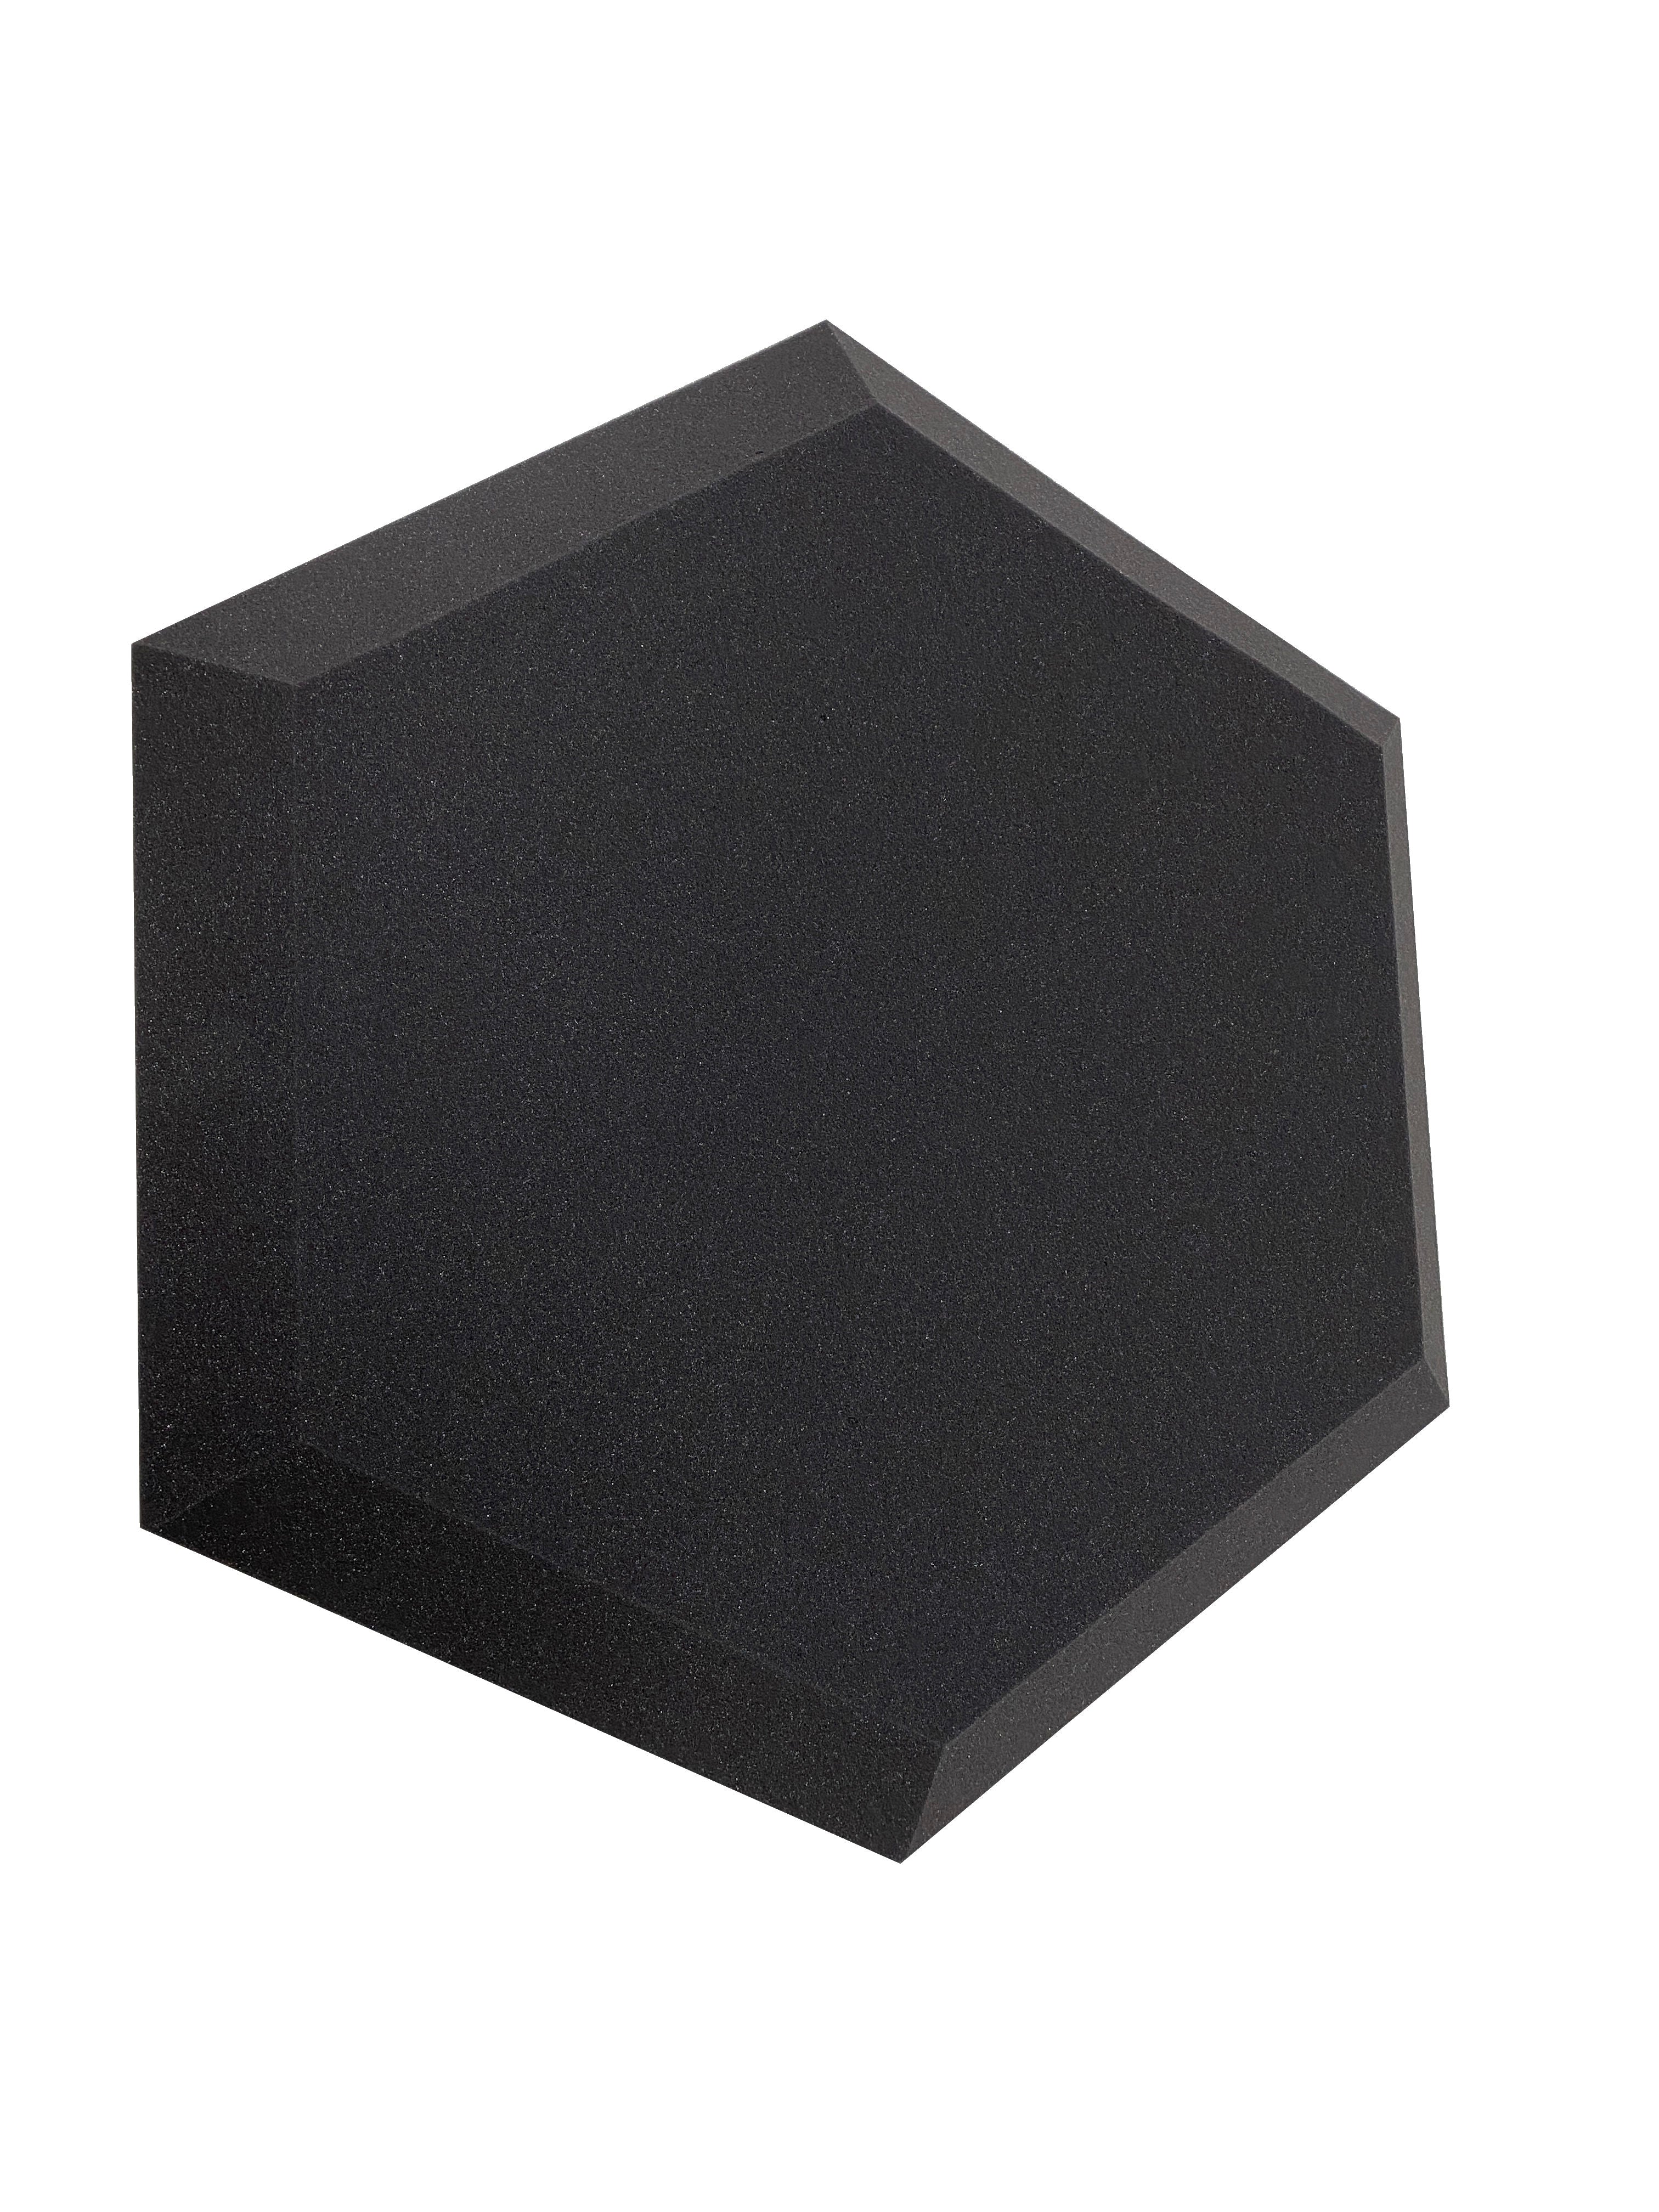 Kaufen dunkelgrau Hexatile3 Acoustic Studio Foam Tile Pack – 12 Fliesen, 2,88 m² Abdeckung